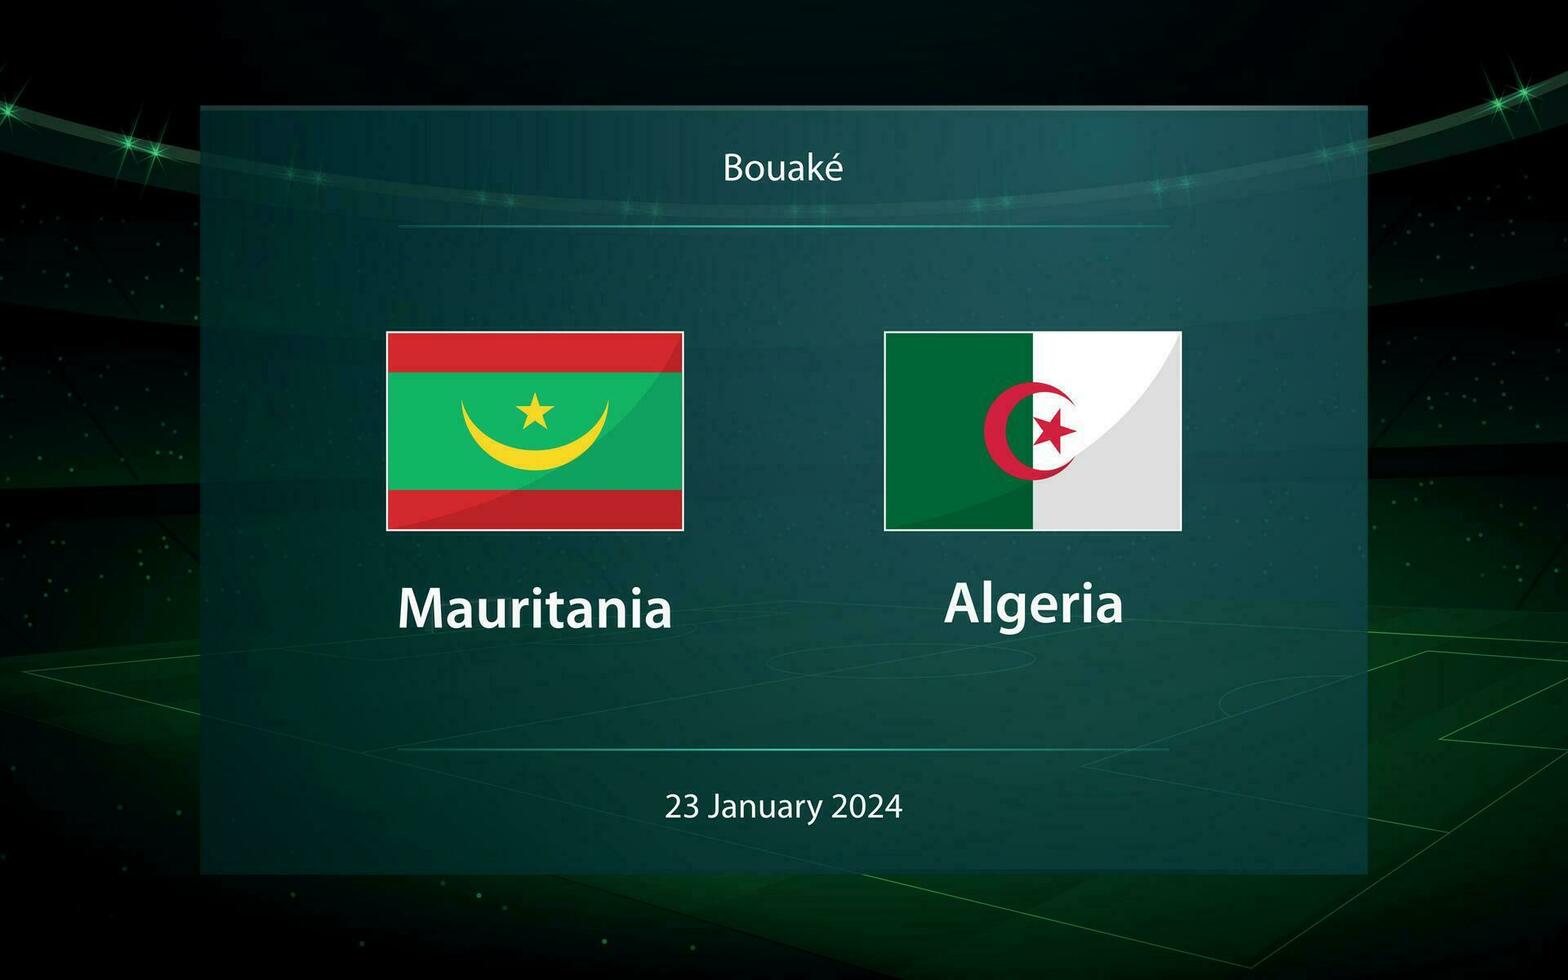 Mauritania vs Algeria. Football scoreboard broadcast graphic vector